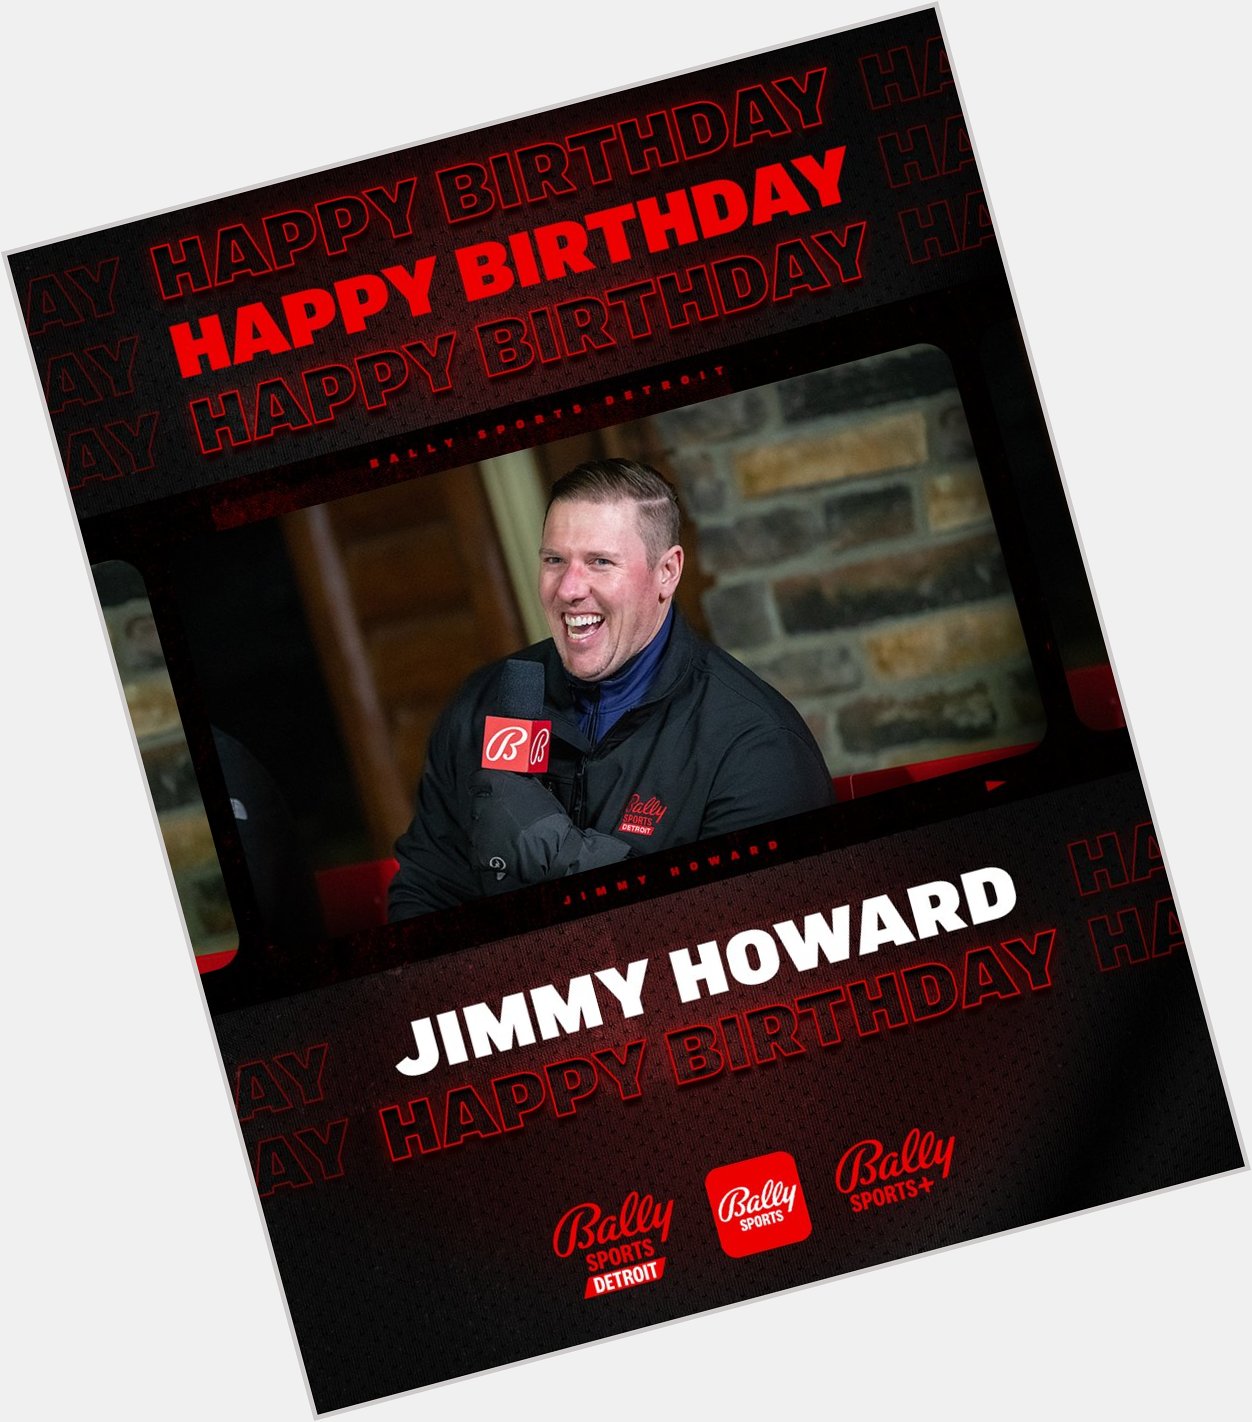 Let\s all wish Jimmy Howard a happy birthday! 